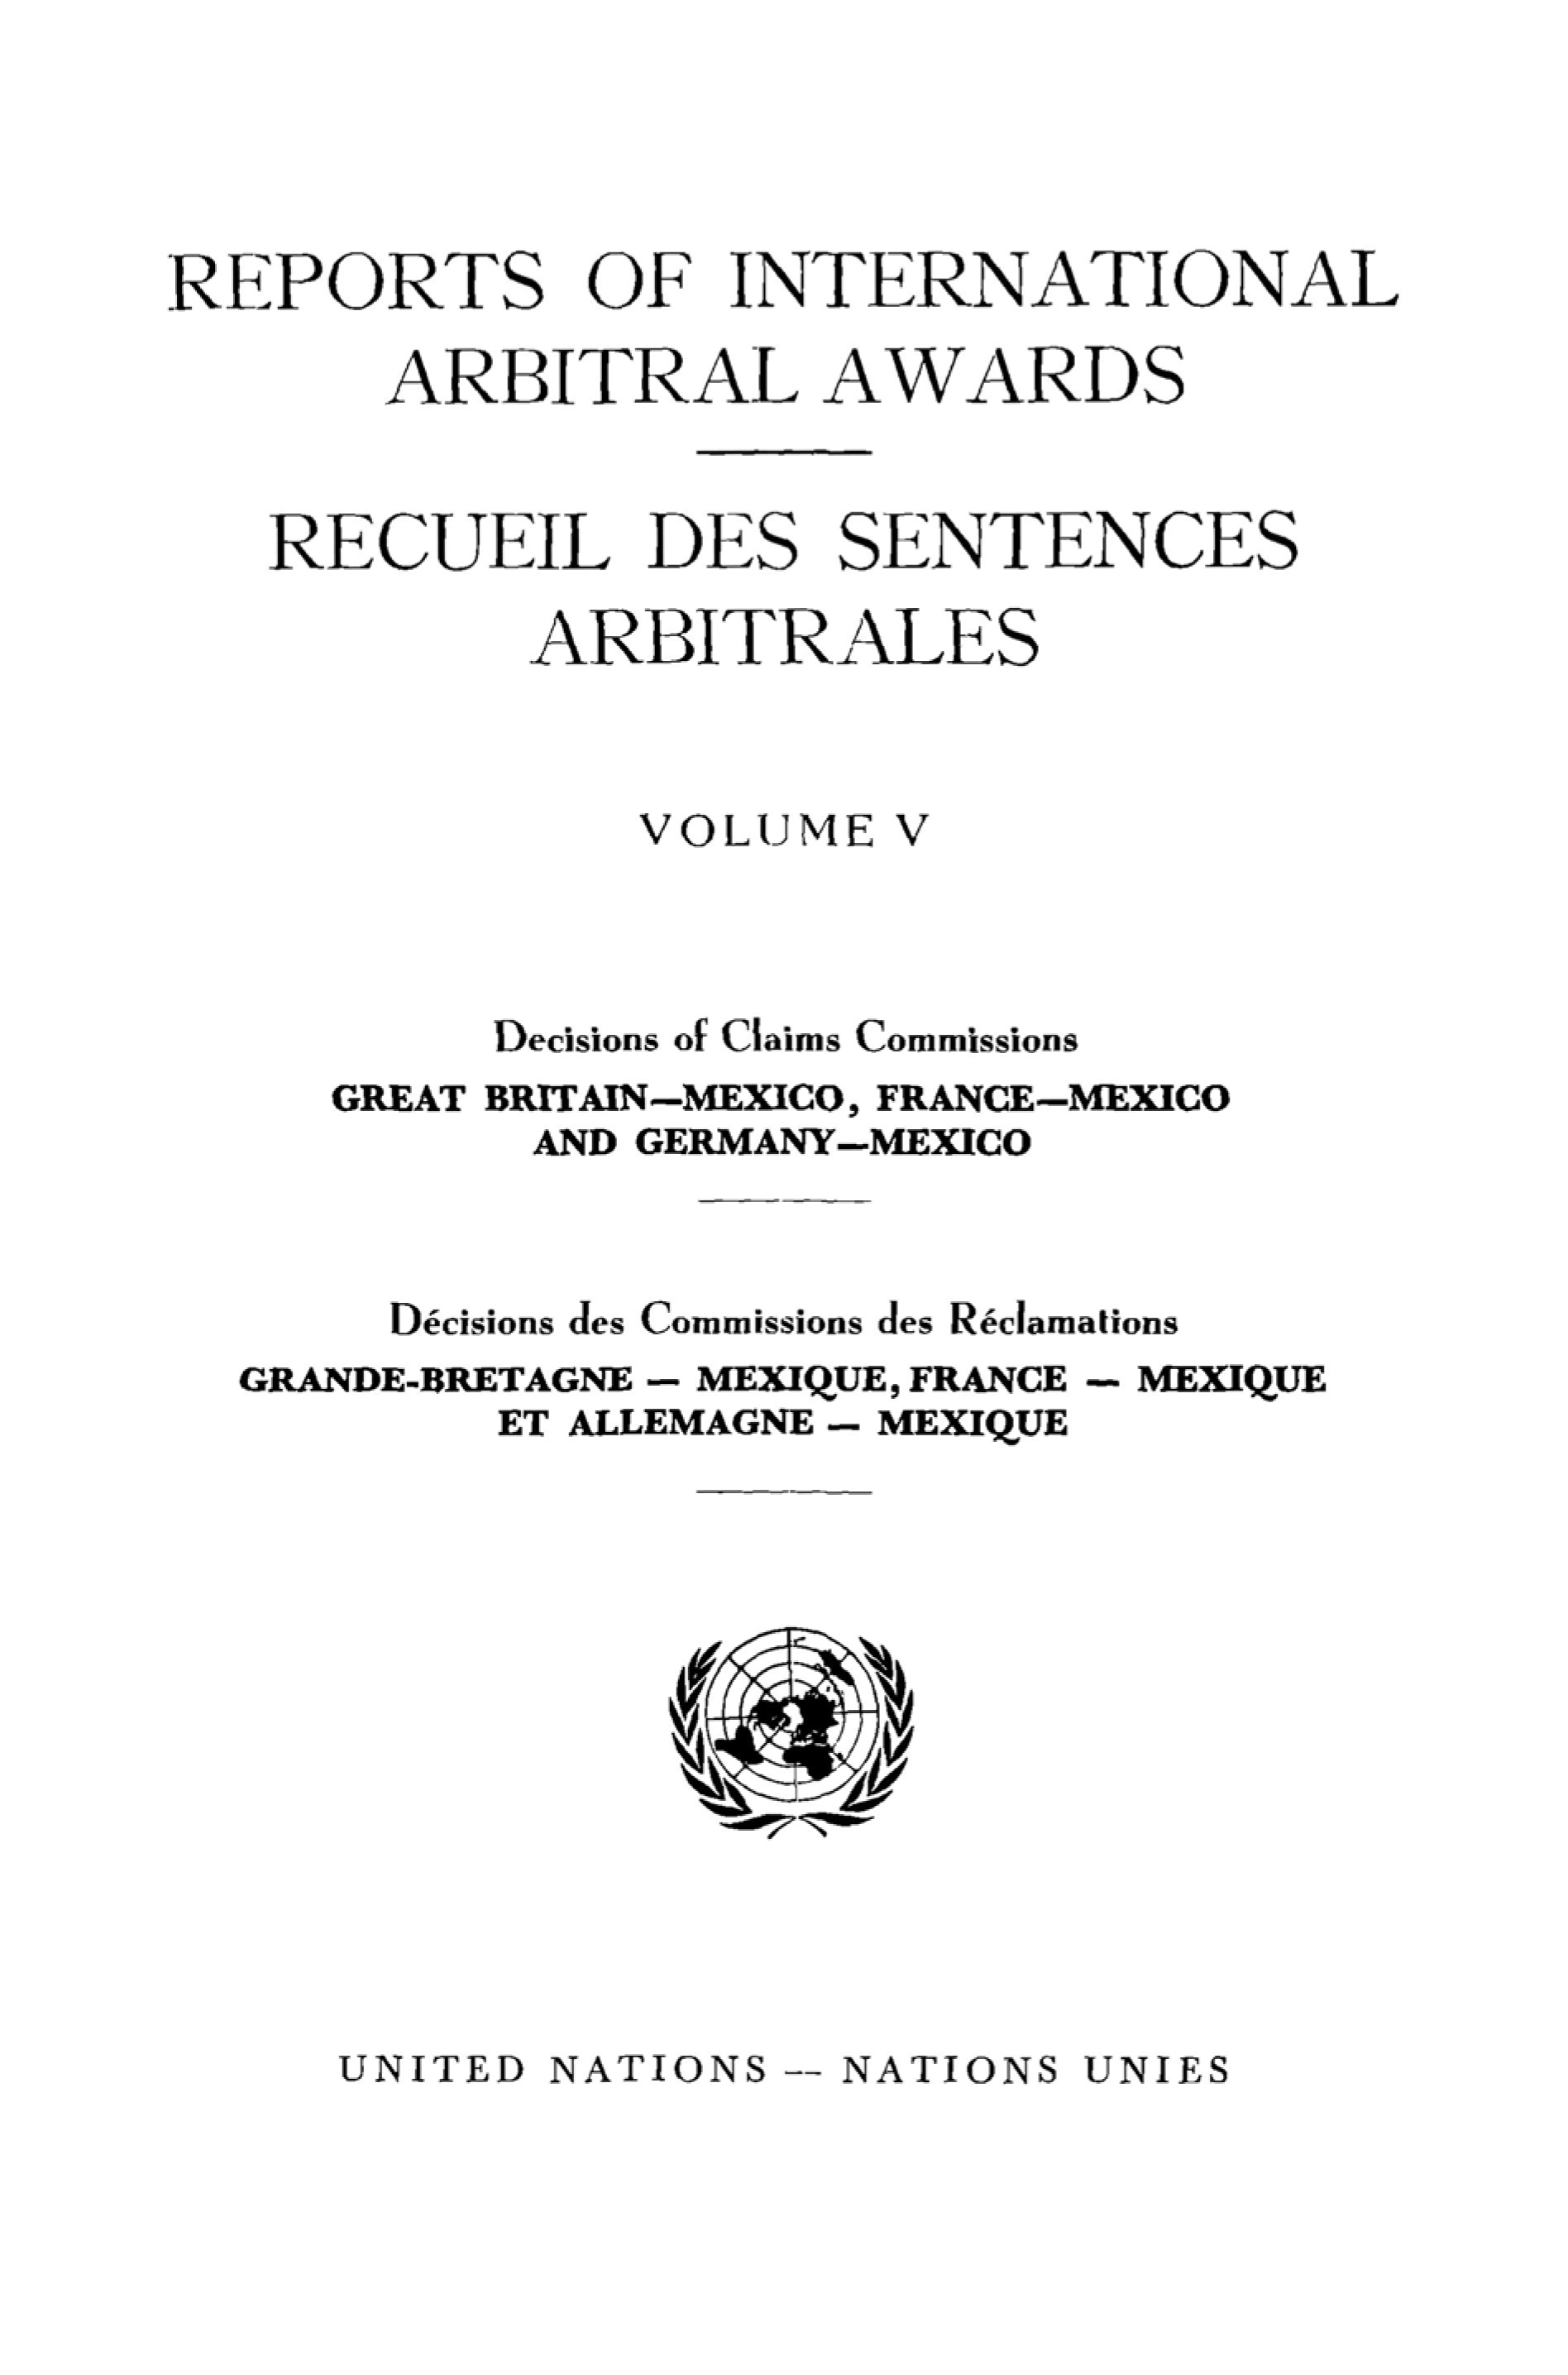 image of Reports of International Arbitral Awards, Vol. V